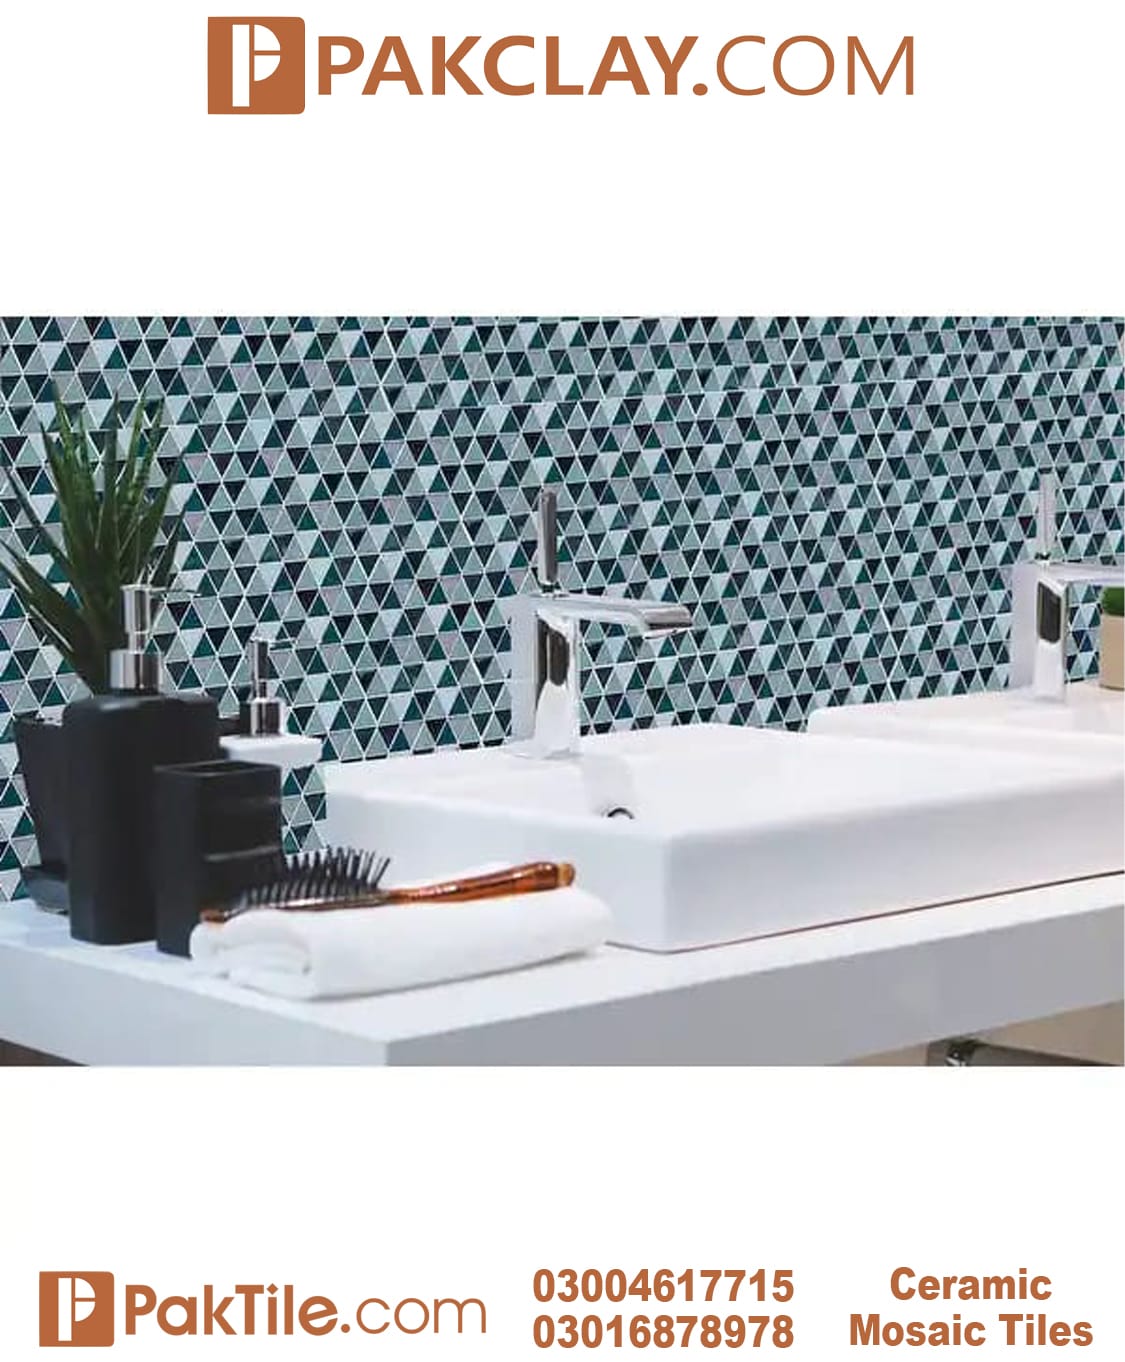 Pak Clay Bathroom Backsplash Mosaic Tiles Design